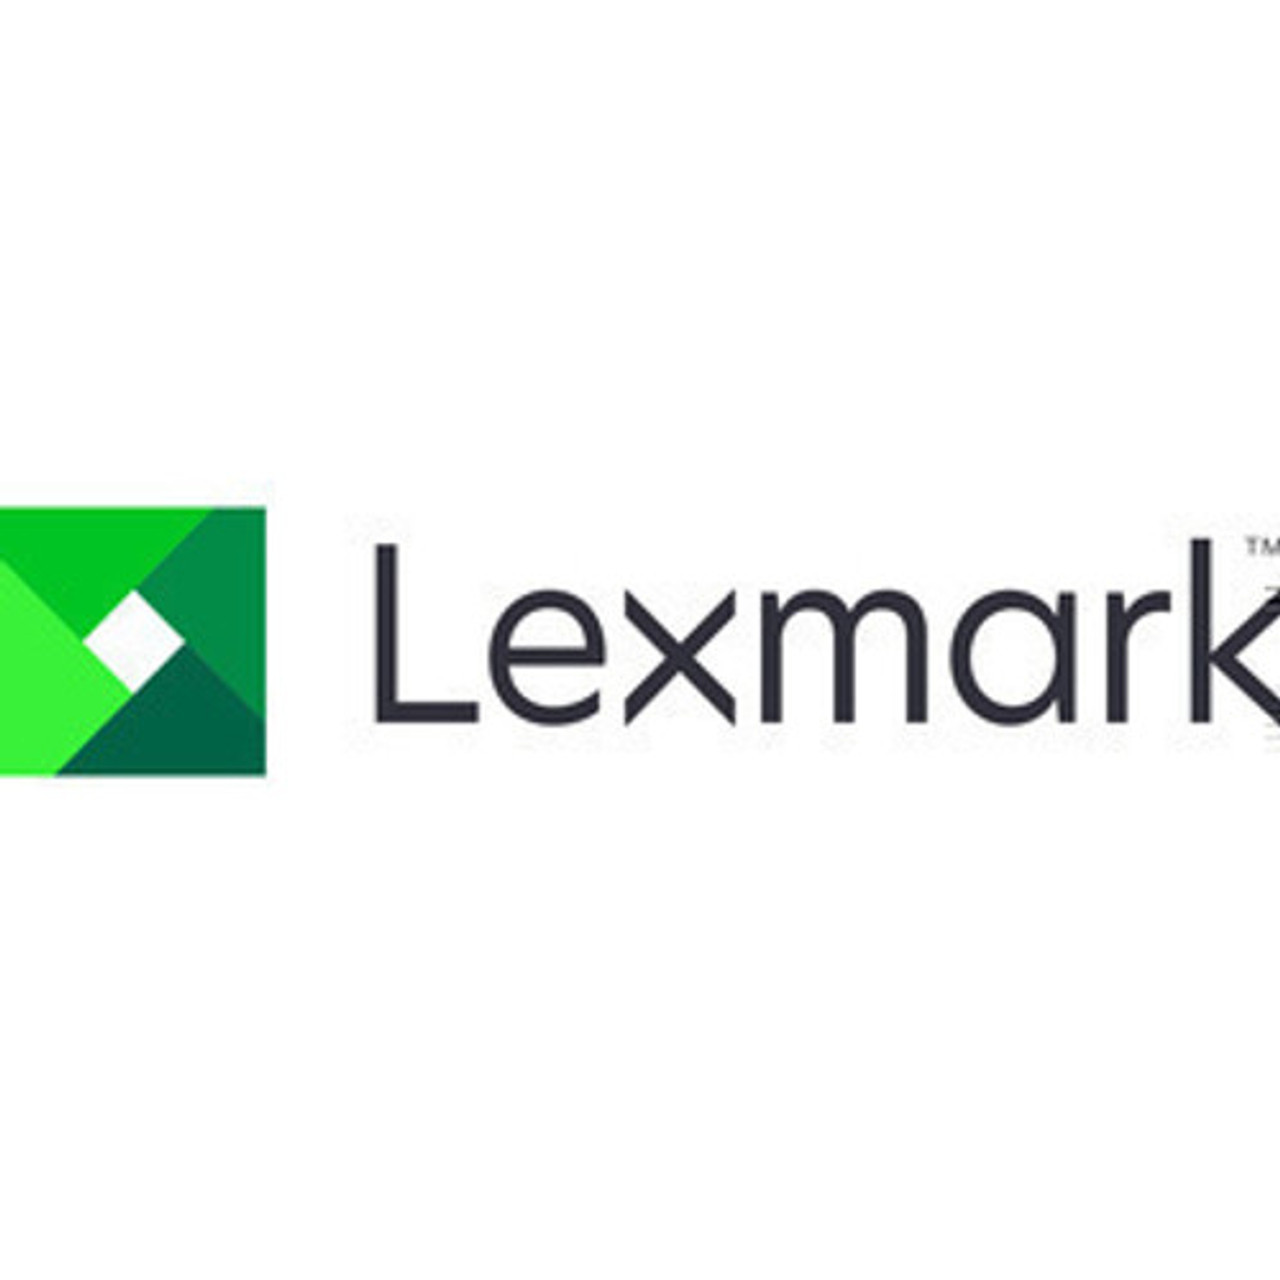 Lexmark Cartridge smart chip contact - 40X8266